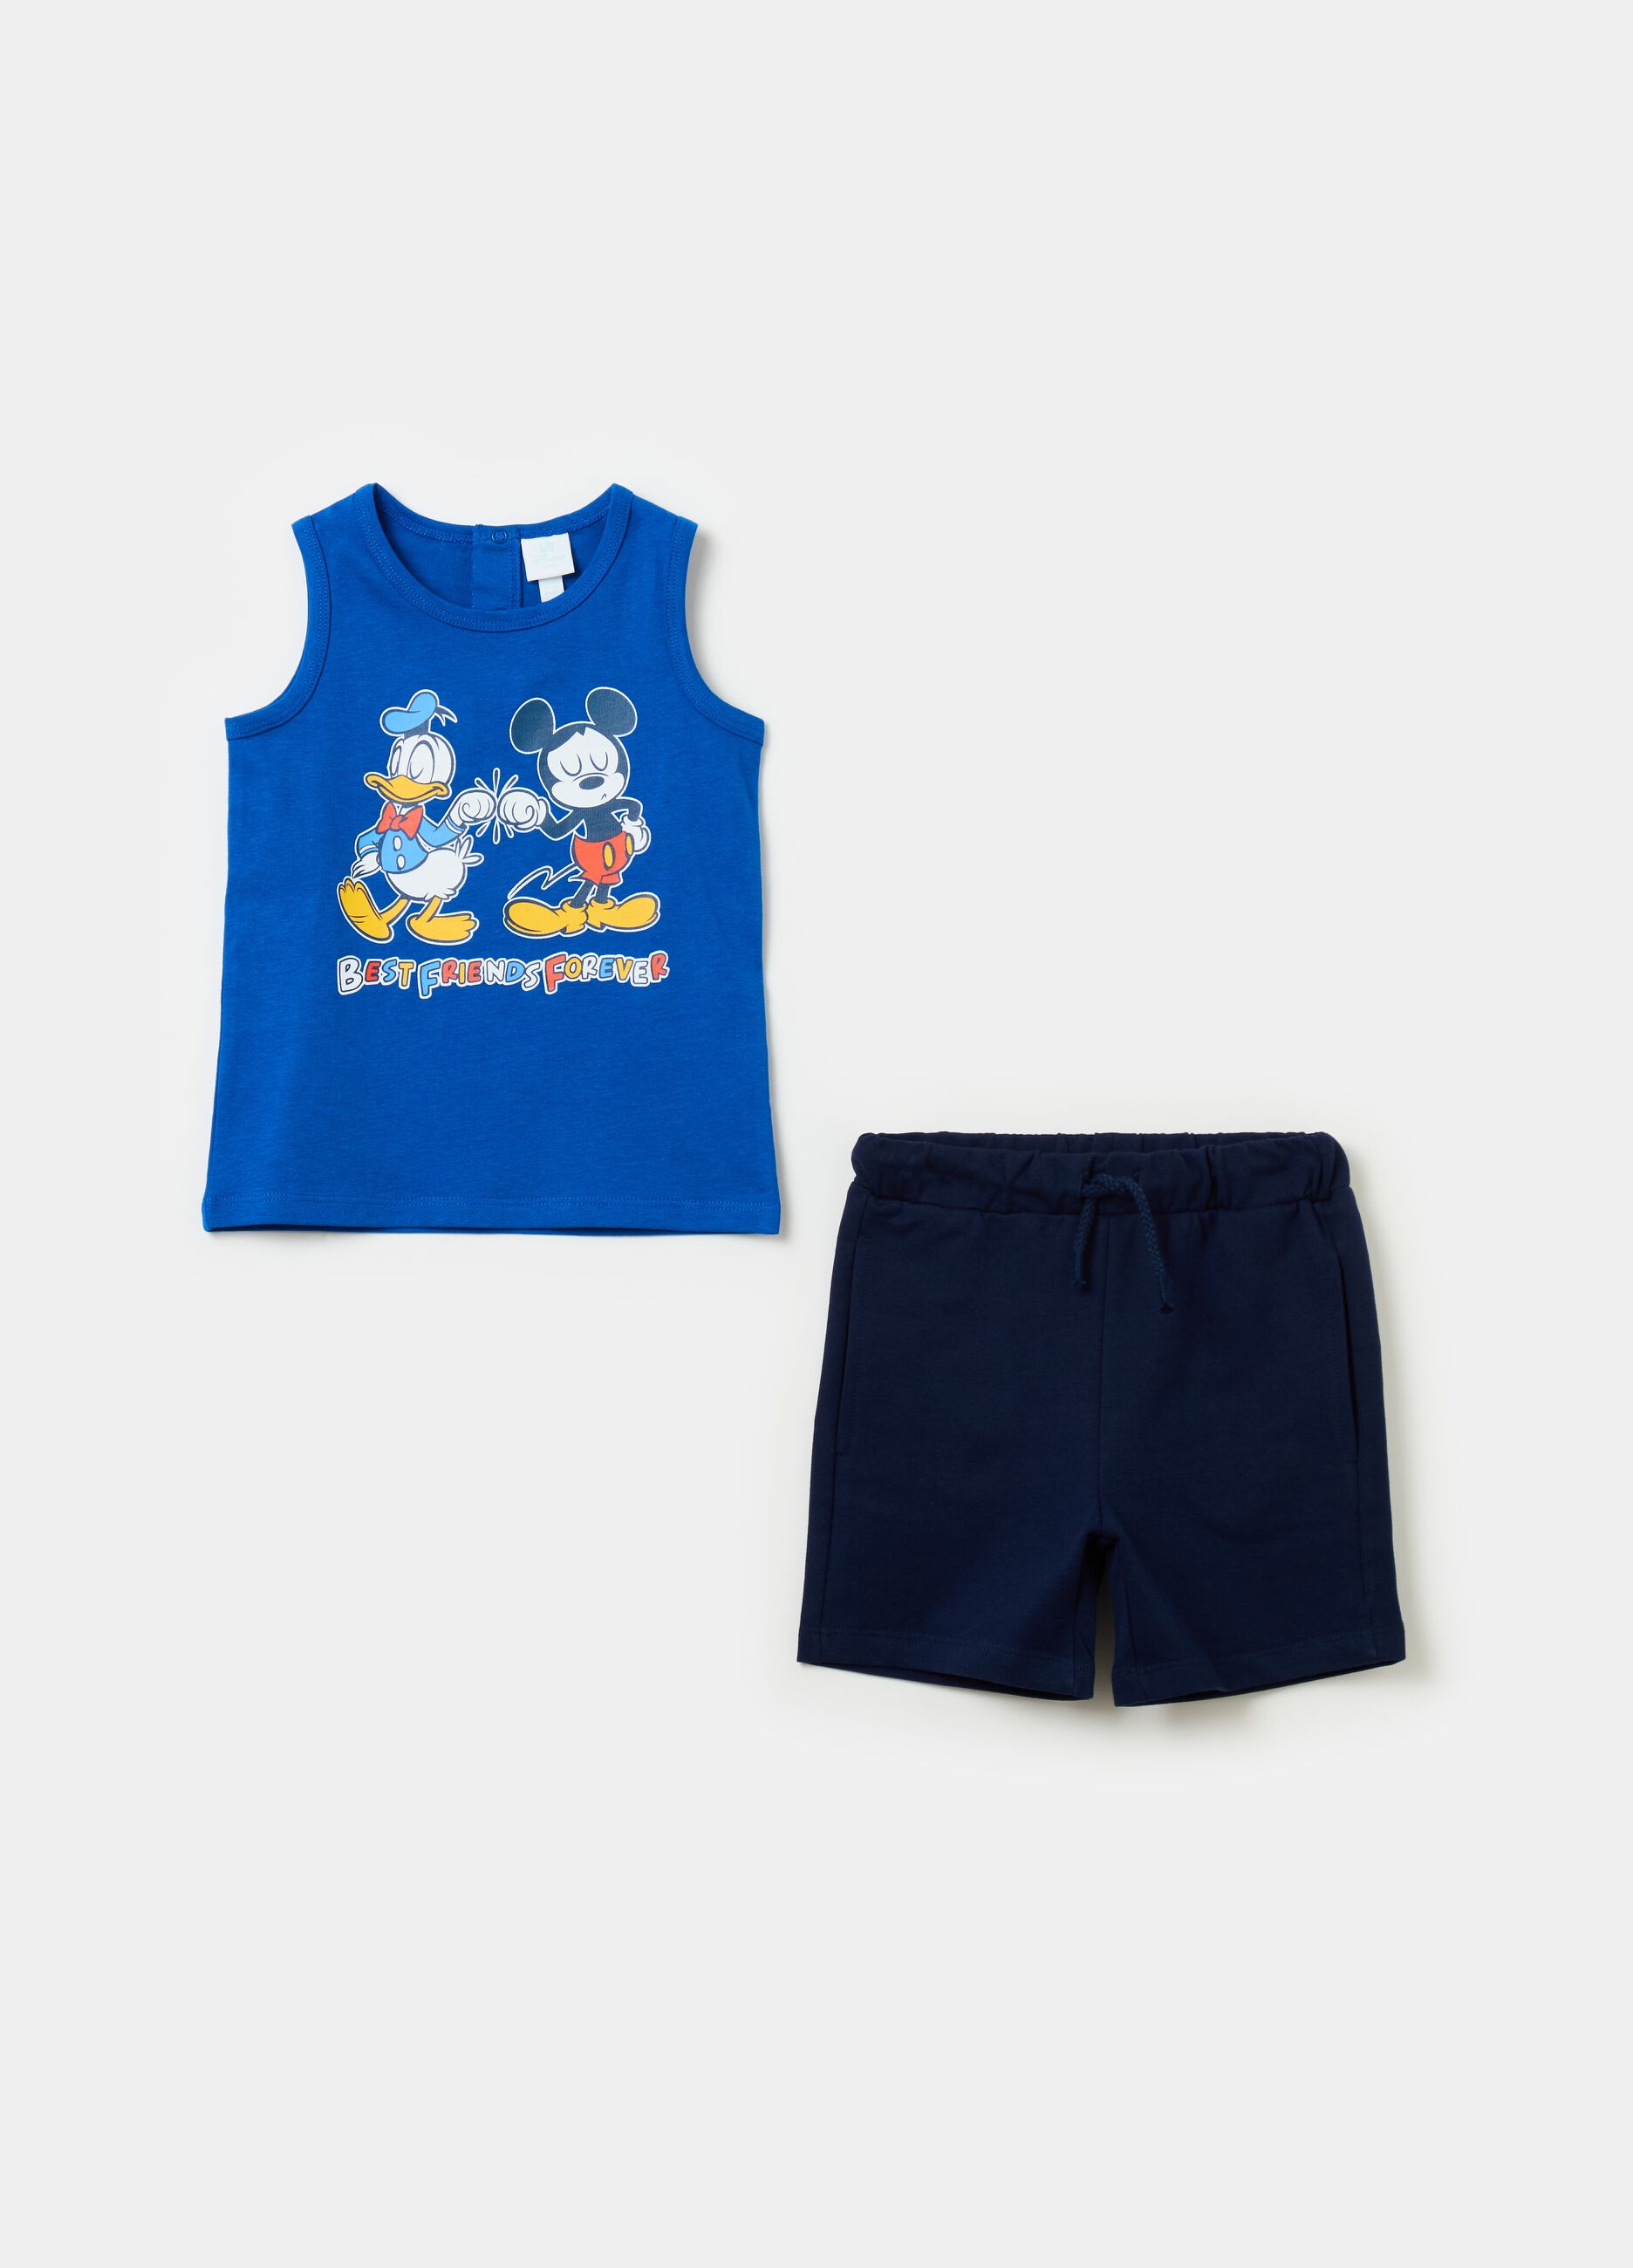 Cotton jogging set with Donald Duck 90 print